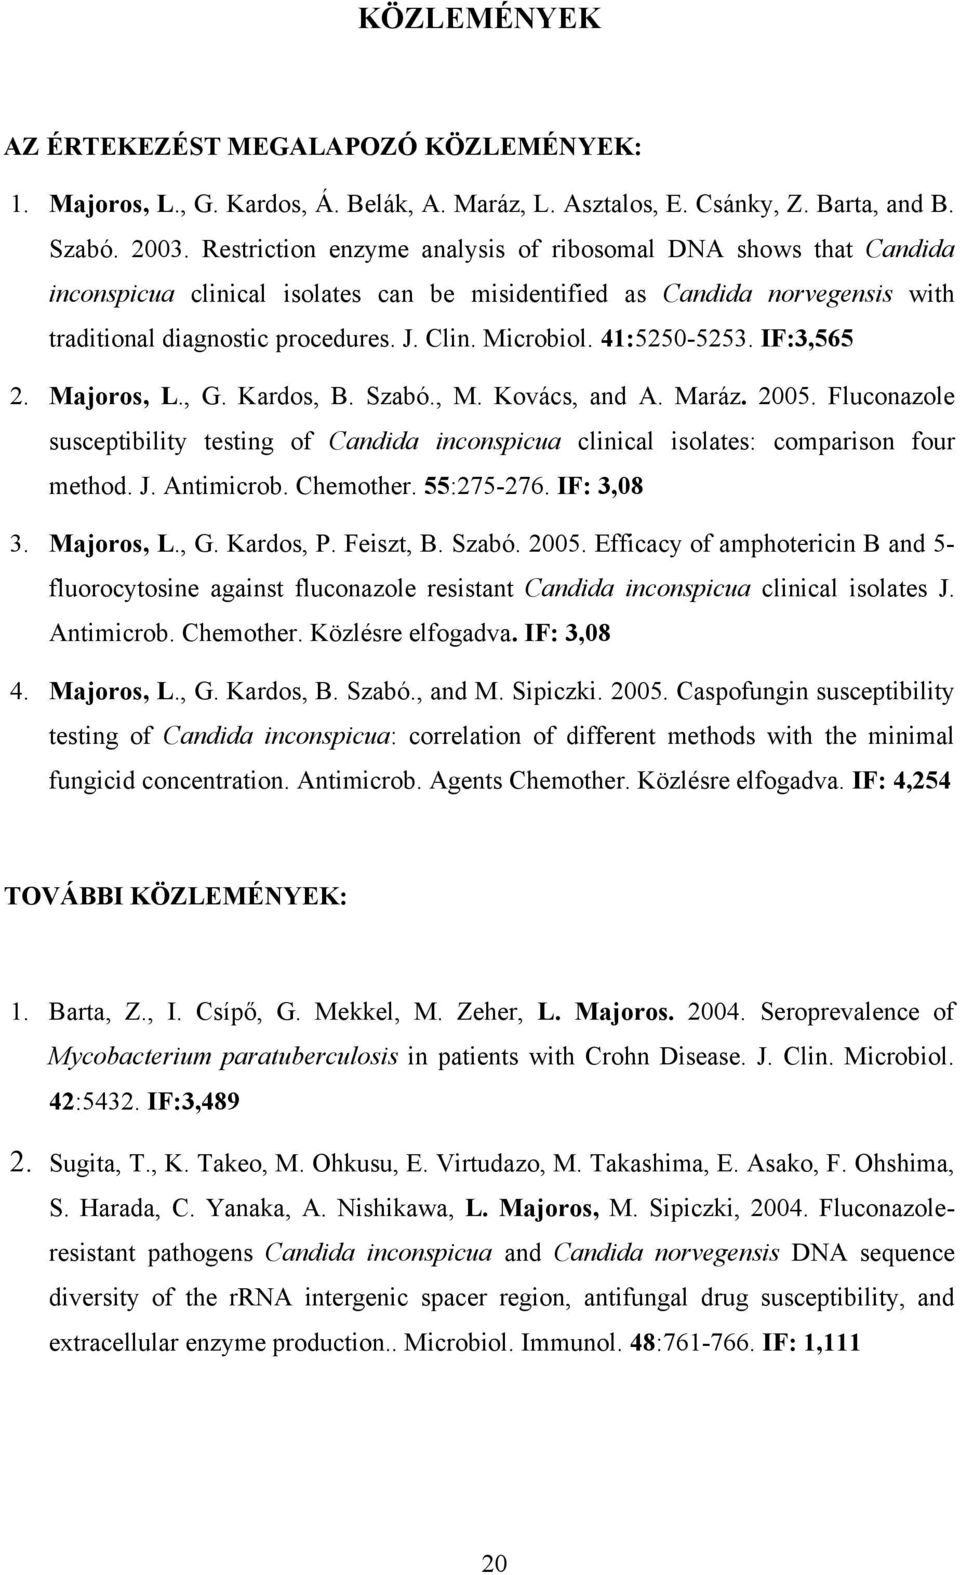 41:5250-5253. IF:3,565 2. Majoros, L., G. Kardos, B. Szabó., M. Kovács, and A. Maráz. 2005. Fluconazole susceptibility testing of Candida inconspicua clinical isolates: comparison four method. J.